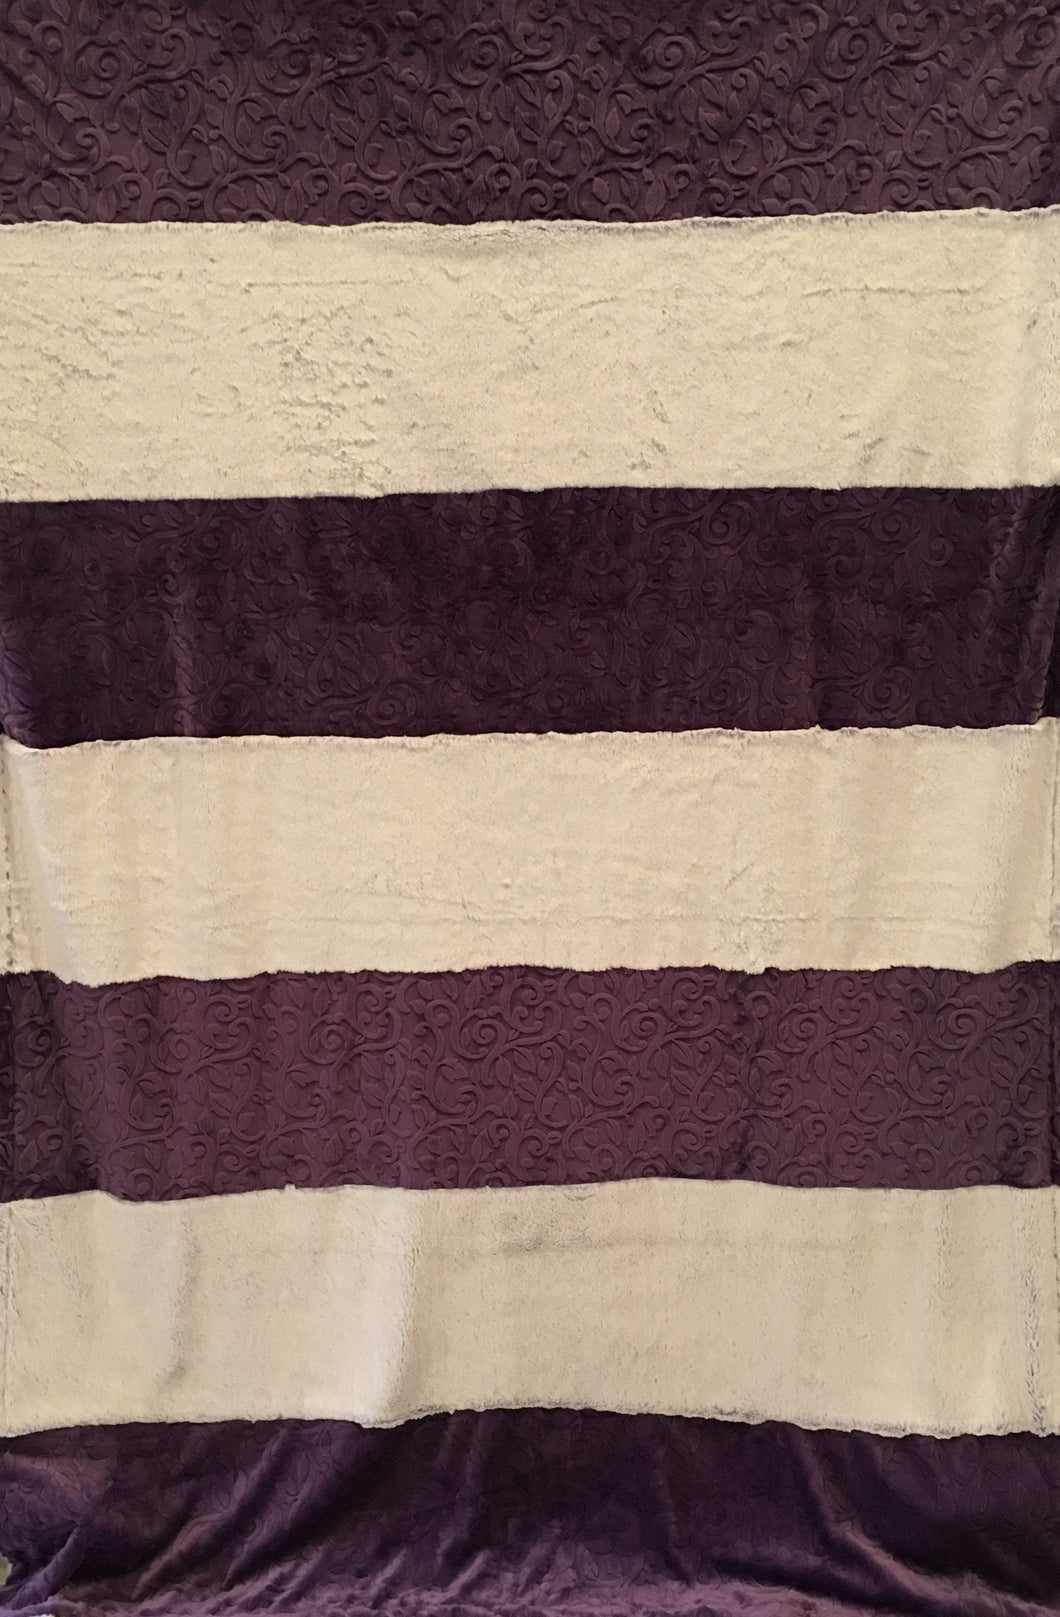 Strip Style Blanket: Embossed Vine in Violet Strip on Luxe Cuddle Frost Iris